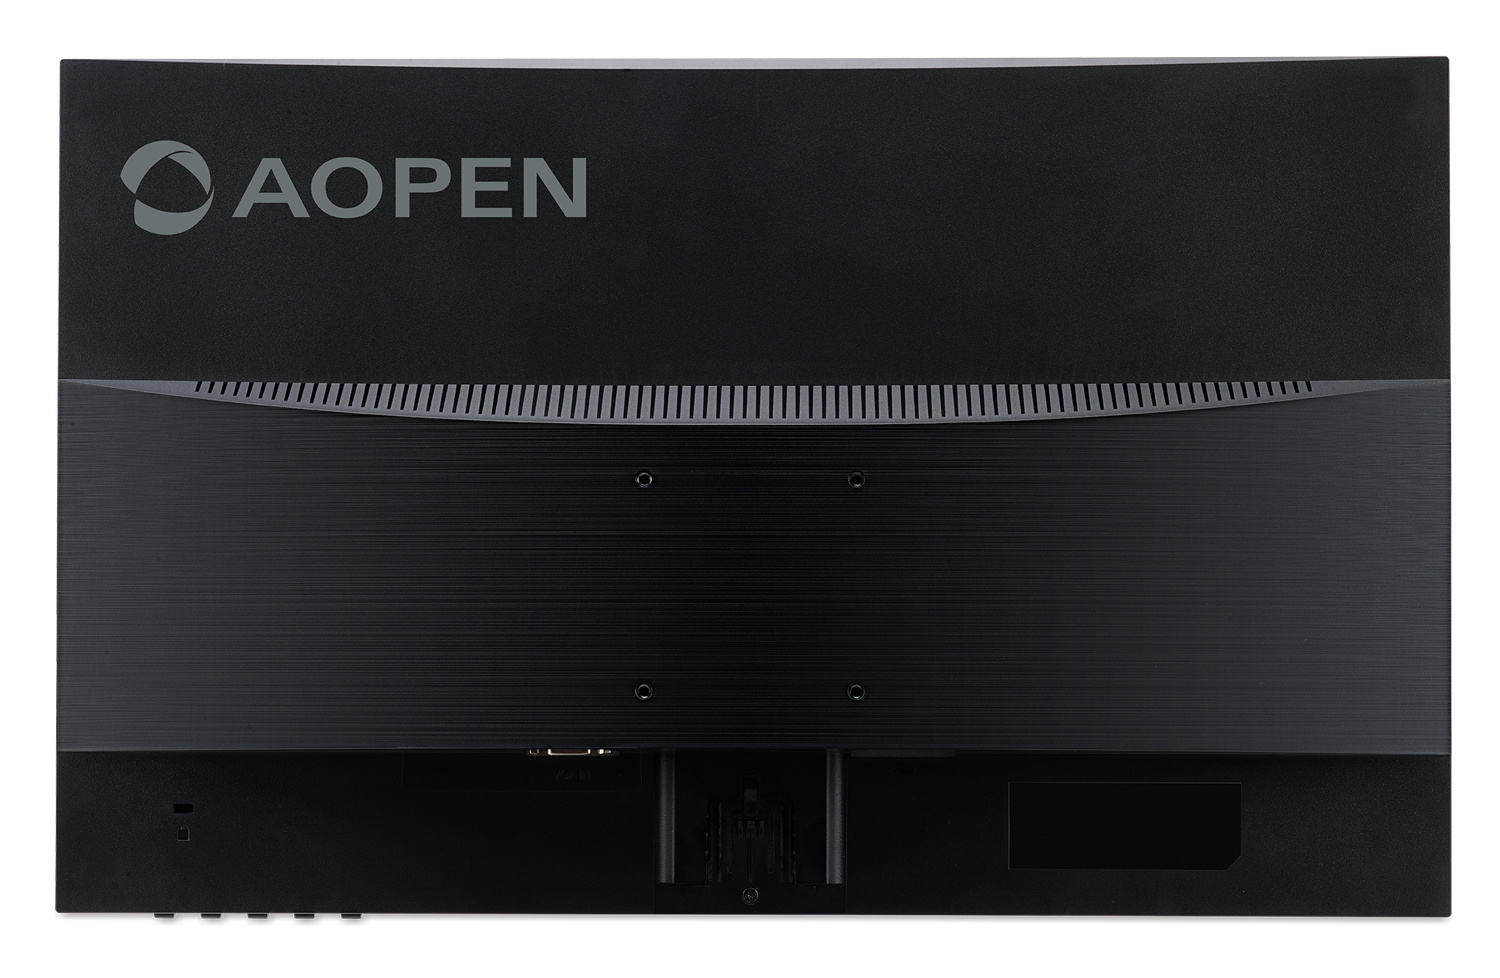 Монитор Aopen 19CX1Qb, черный